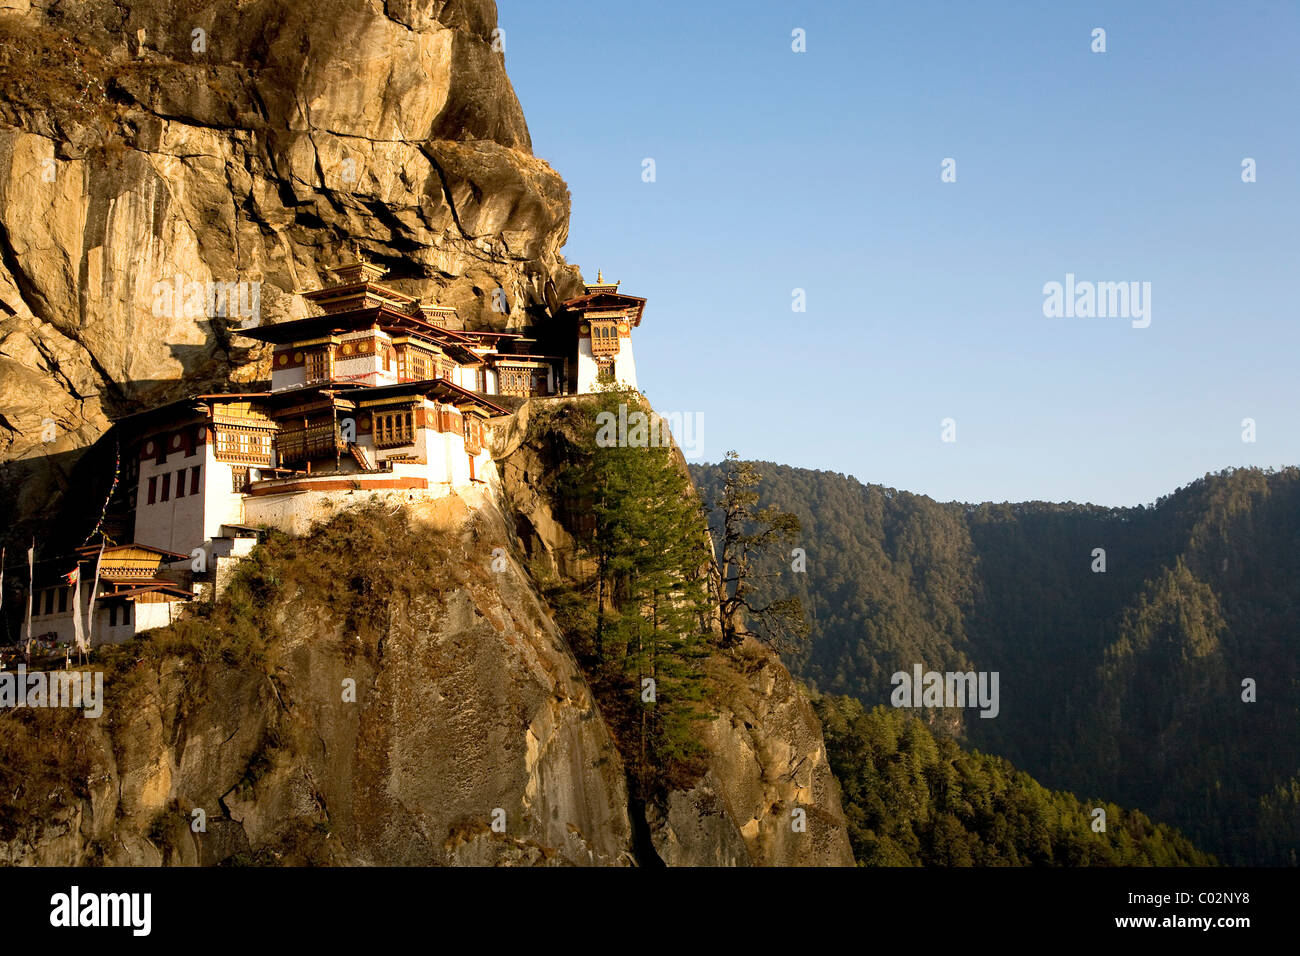 Monasterio de Taktsang, 3120m, también conocido como Tiger's Nest, Paro, Bhután, Reino de Bhután, en el sur de Asia Foto de stock